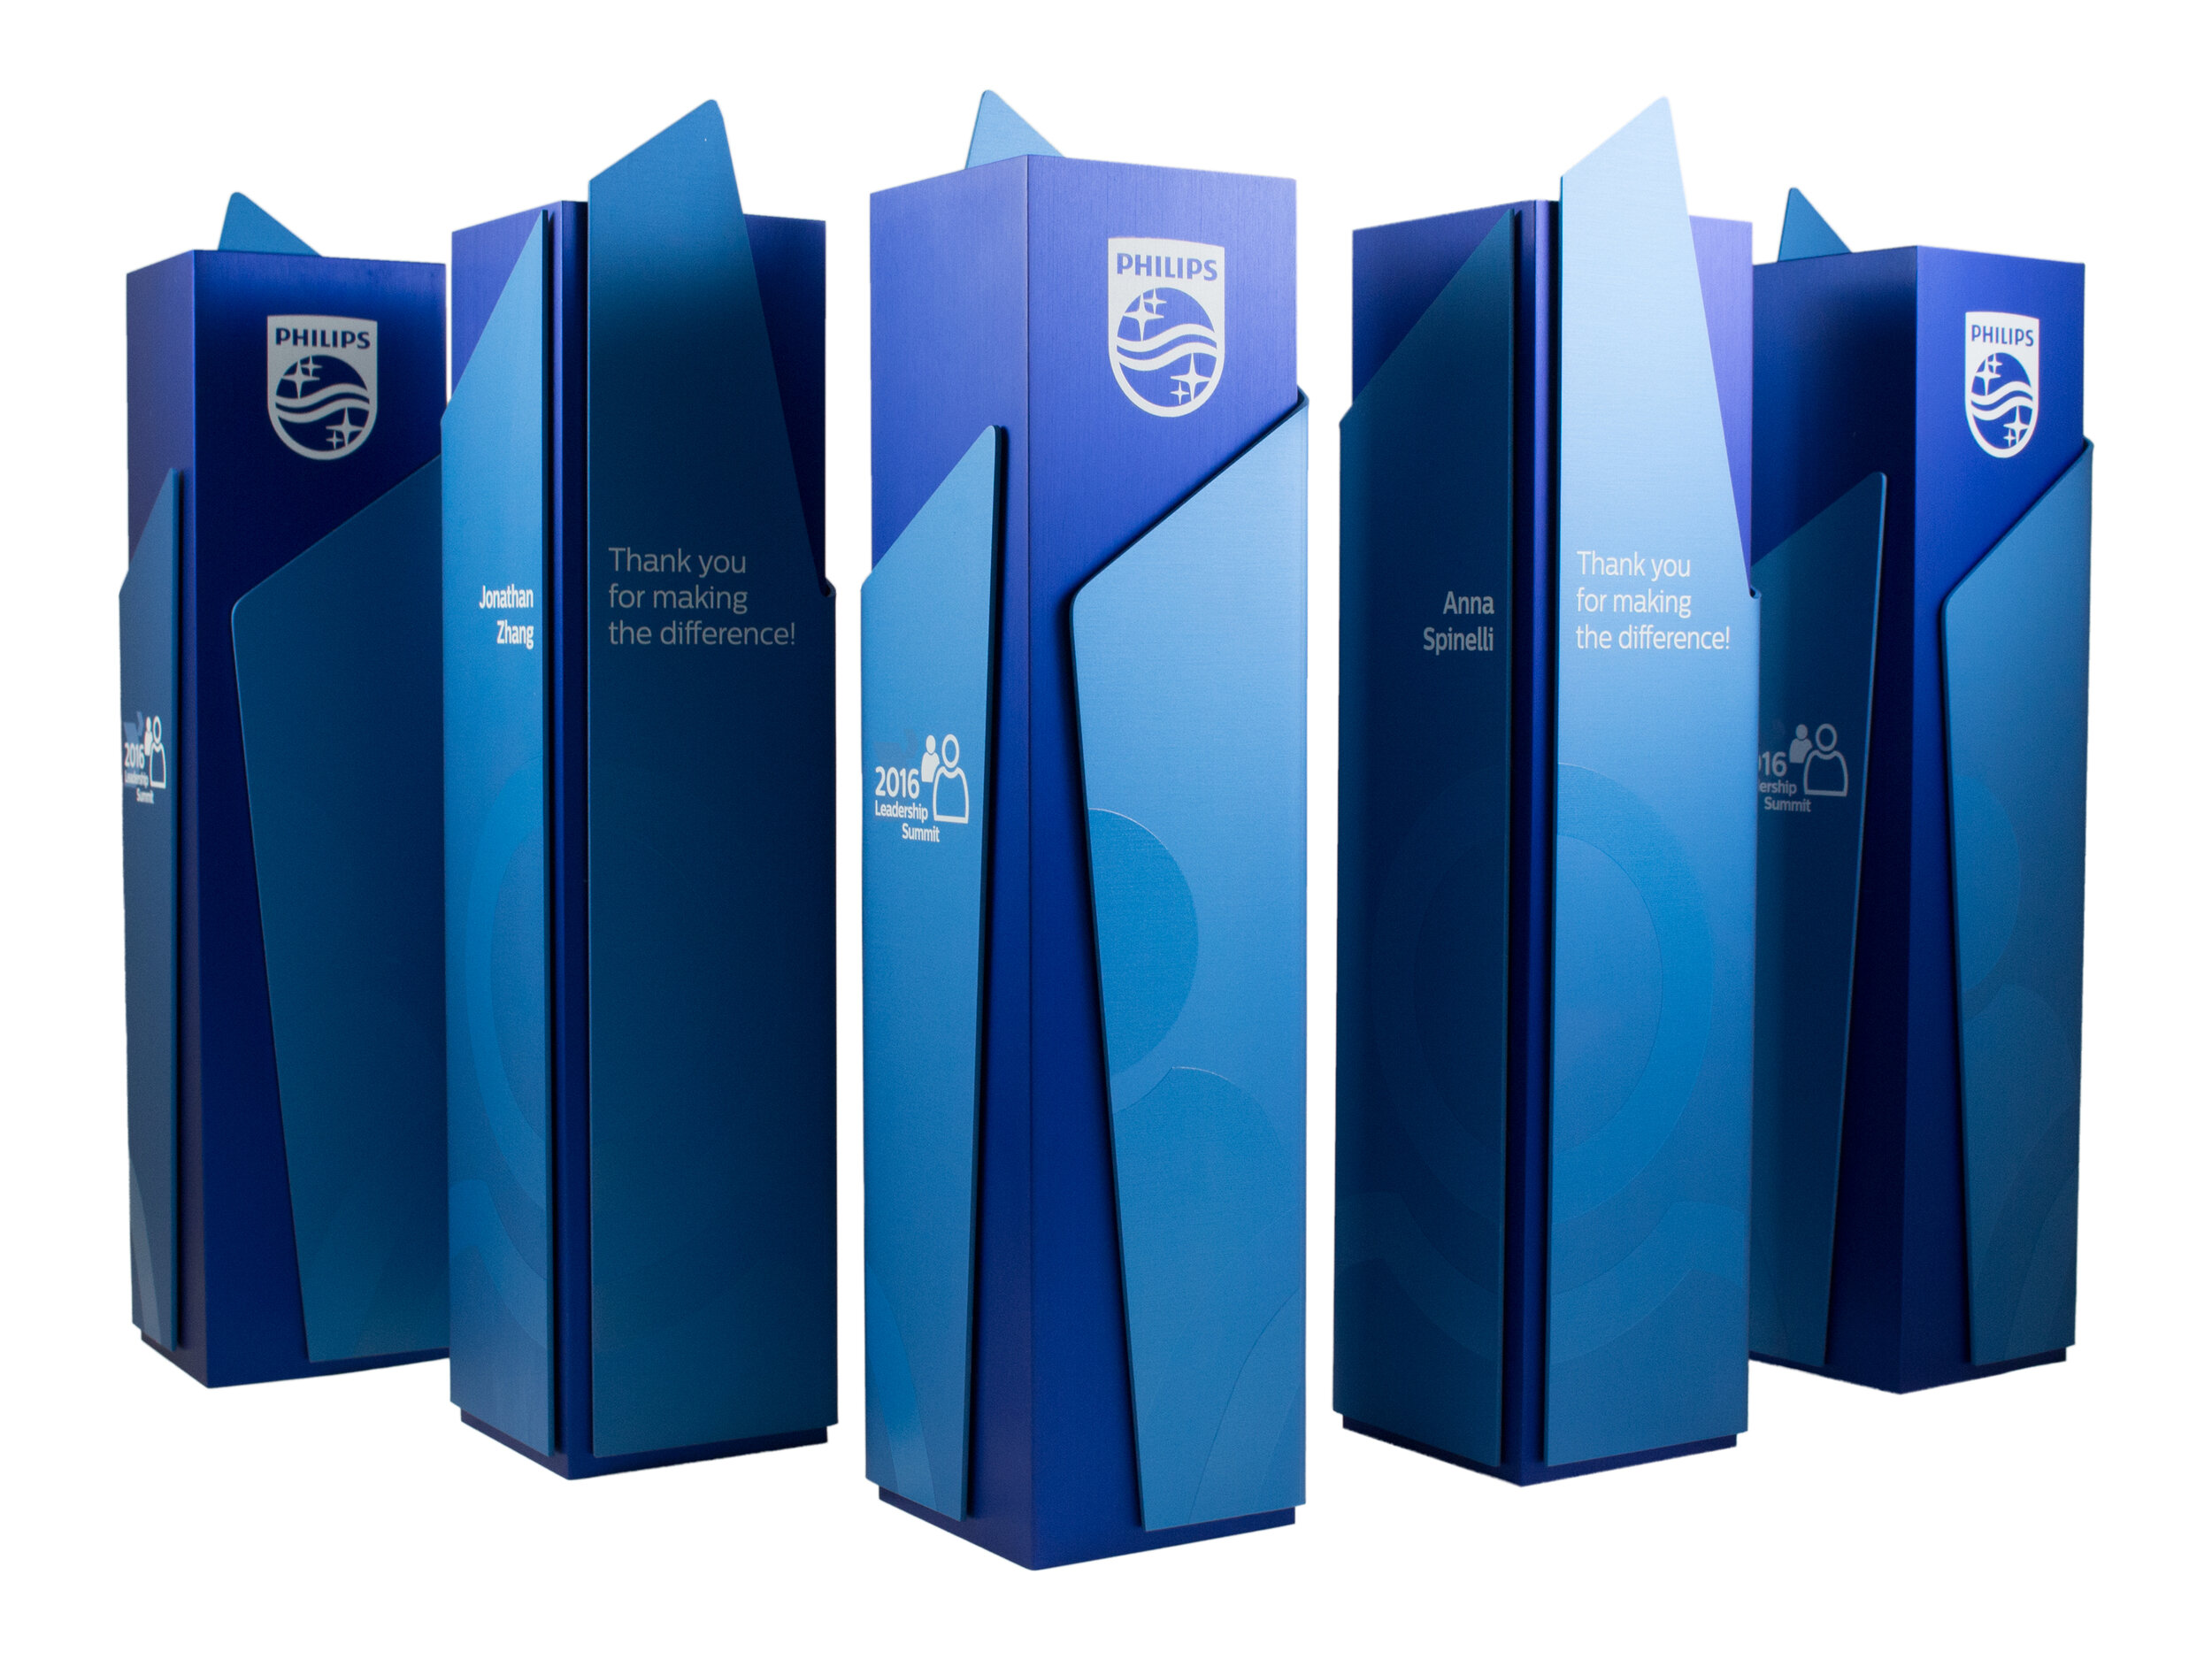 Philips custom metal award corporate recognition program 